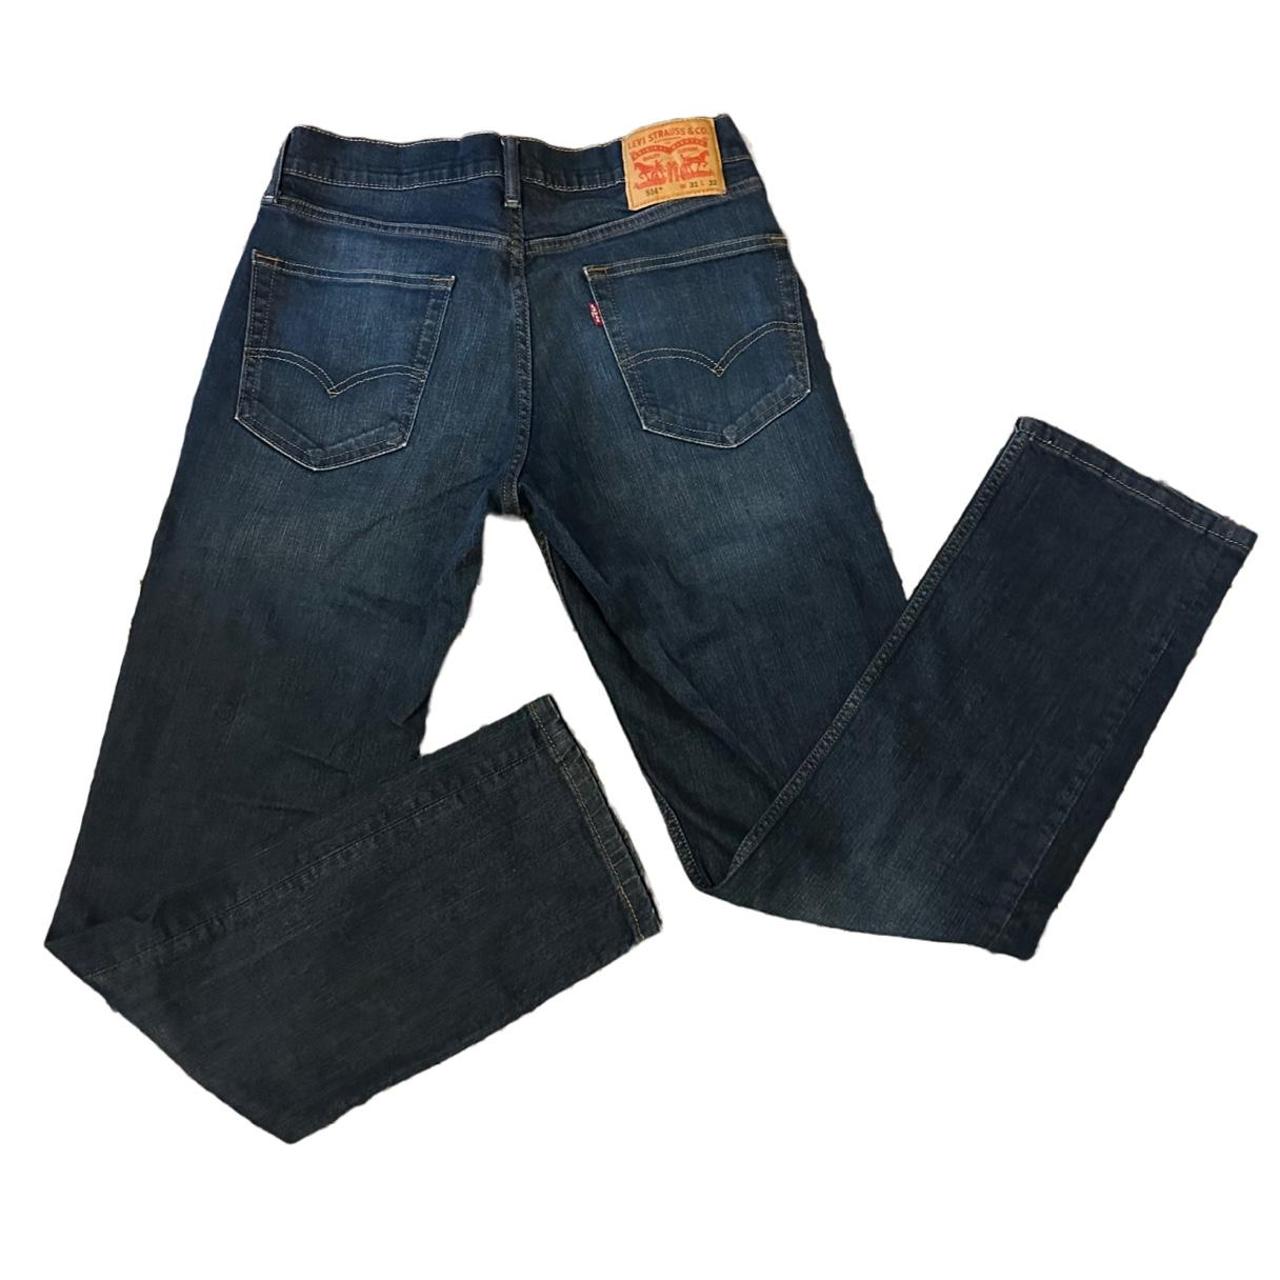 Levi's 514 Straight Fit Jeans Mens 31x32 Blue Dark... - Depop